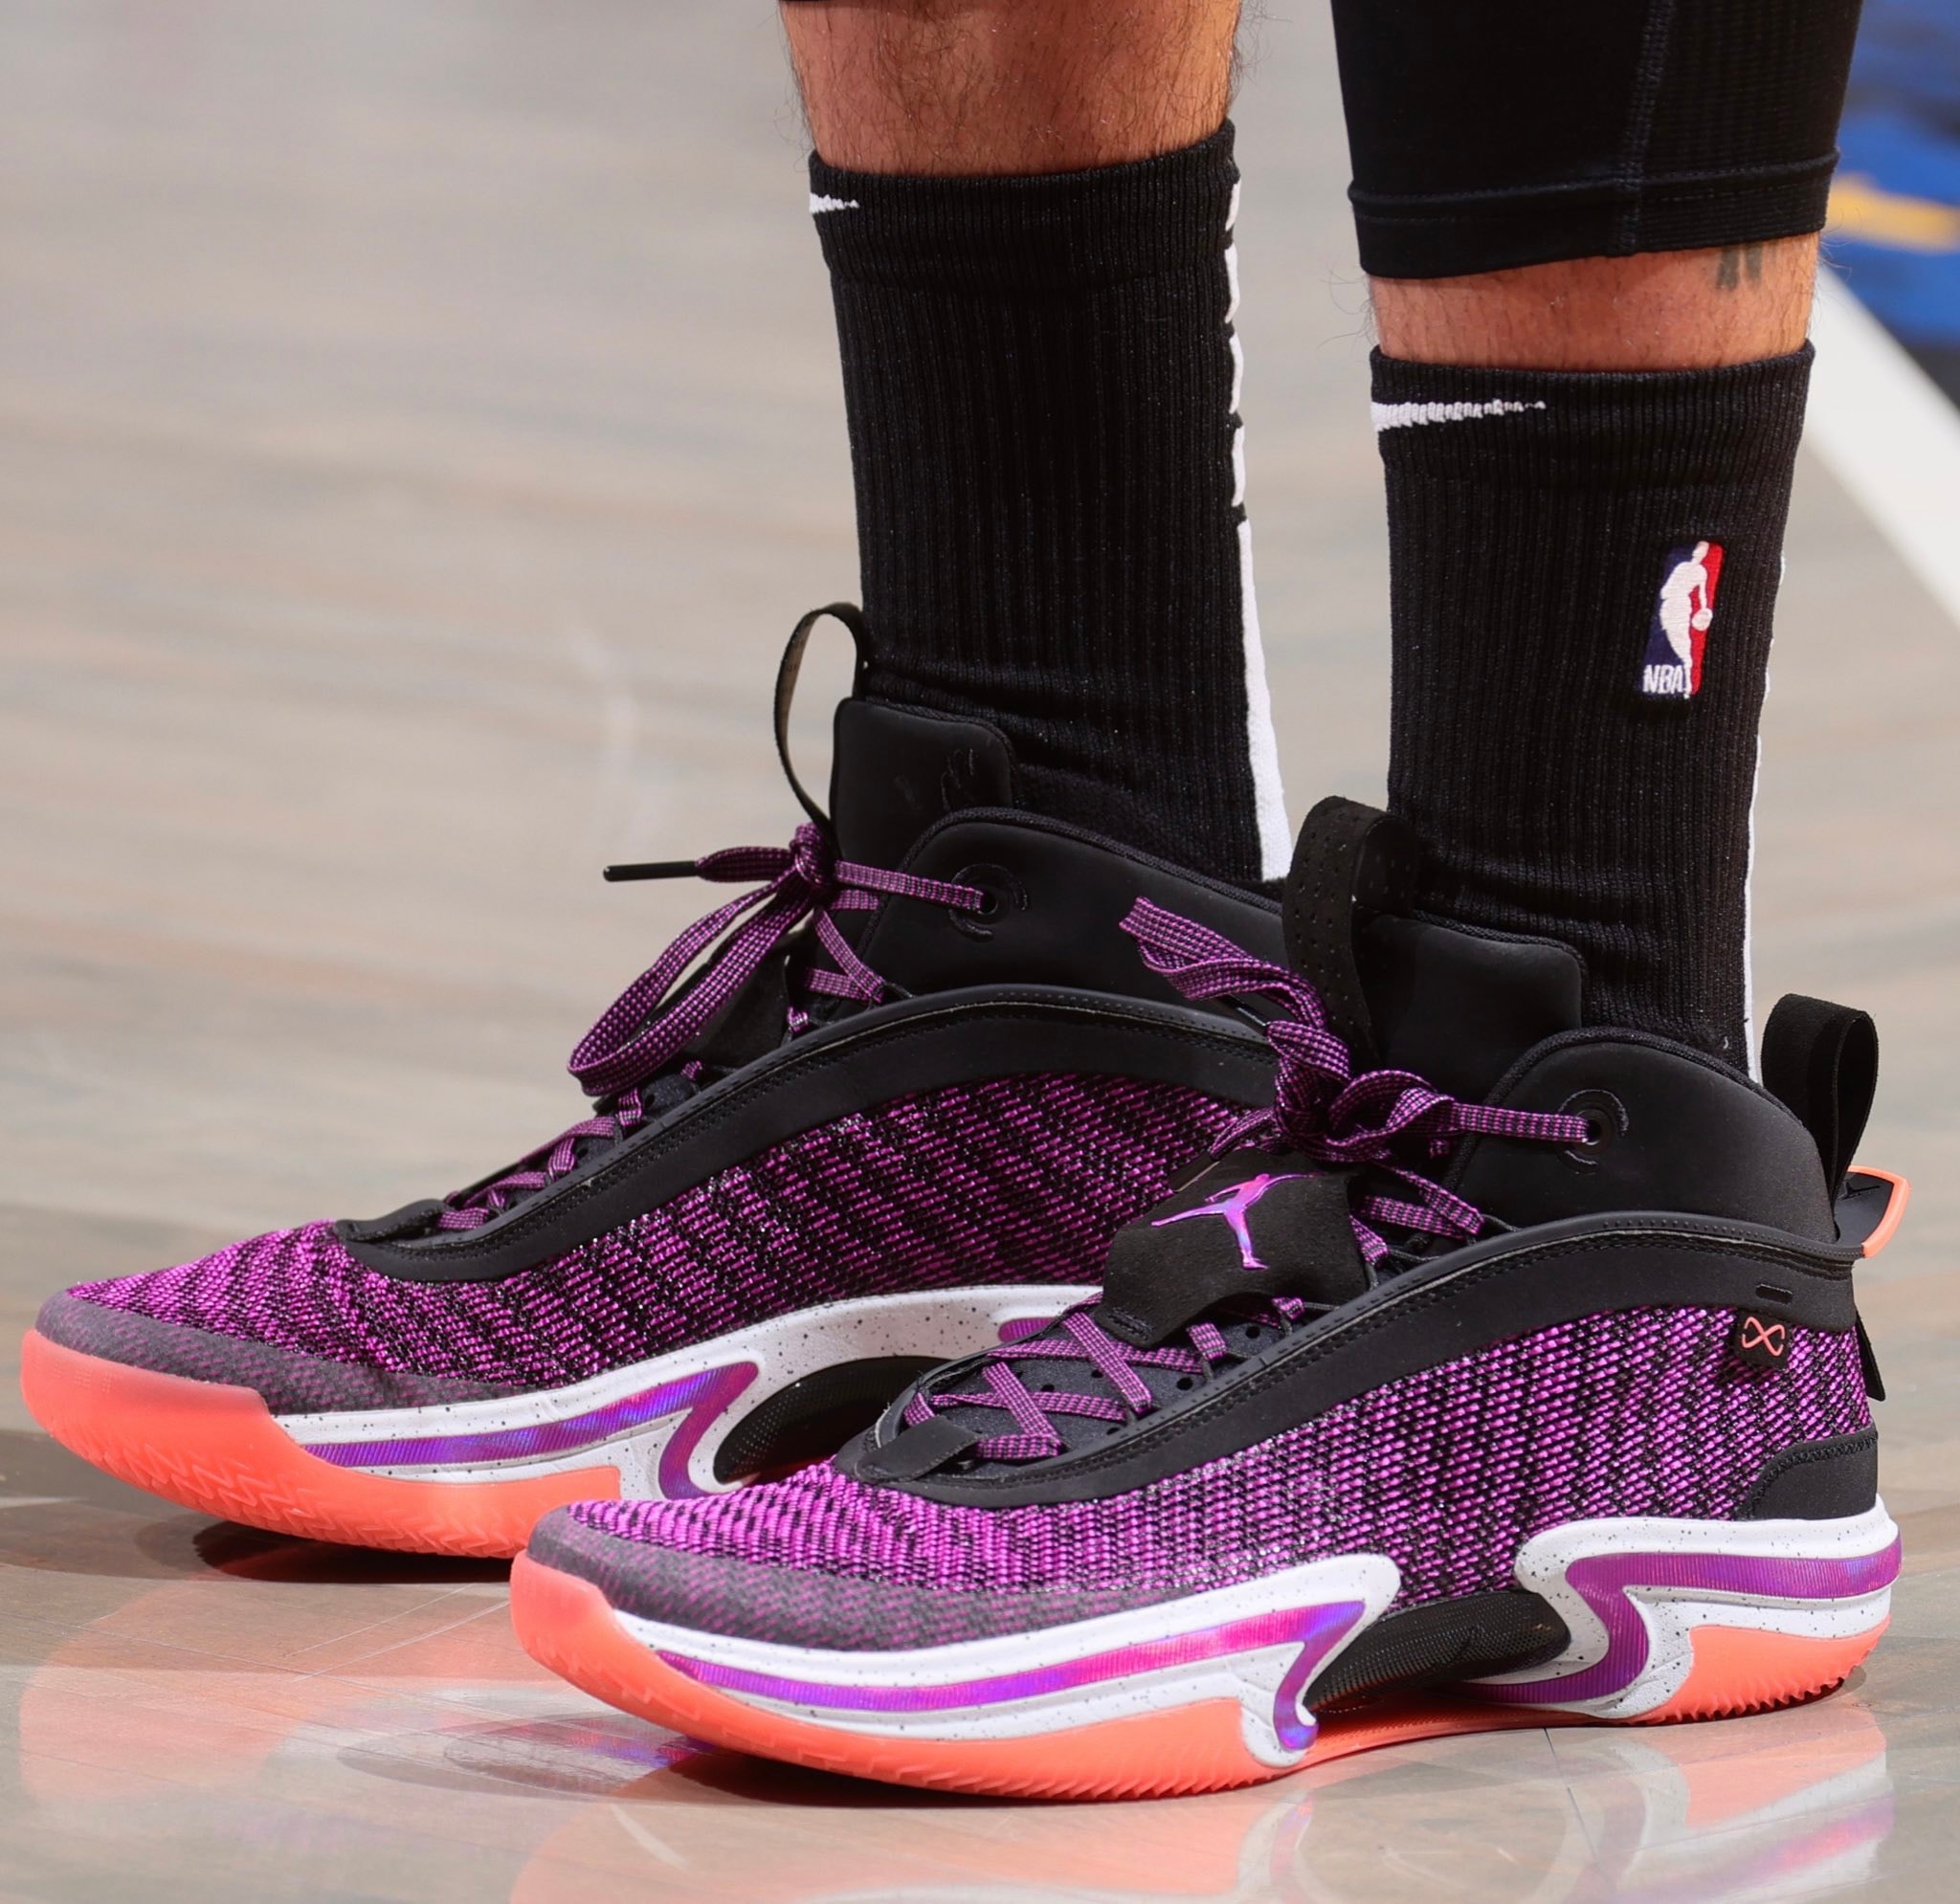 Jayson Tatum 率先著用 Jordan Brand 最新科技籃球鞋款 Air Jordan 36